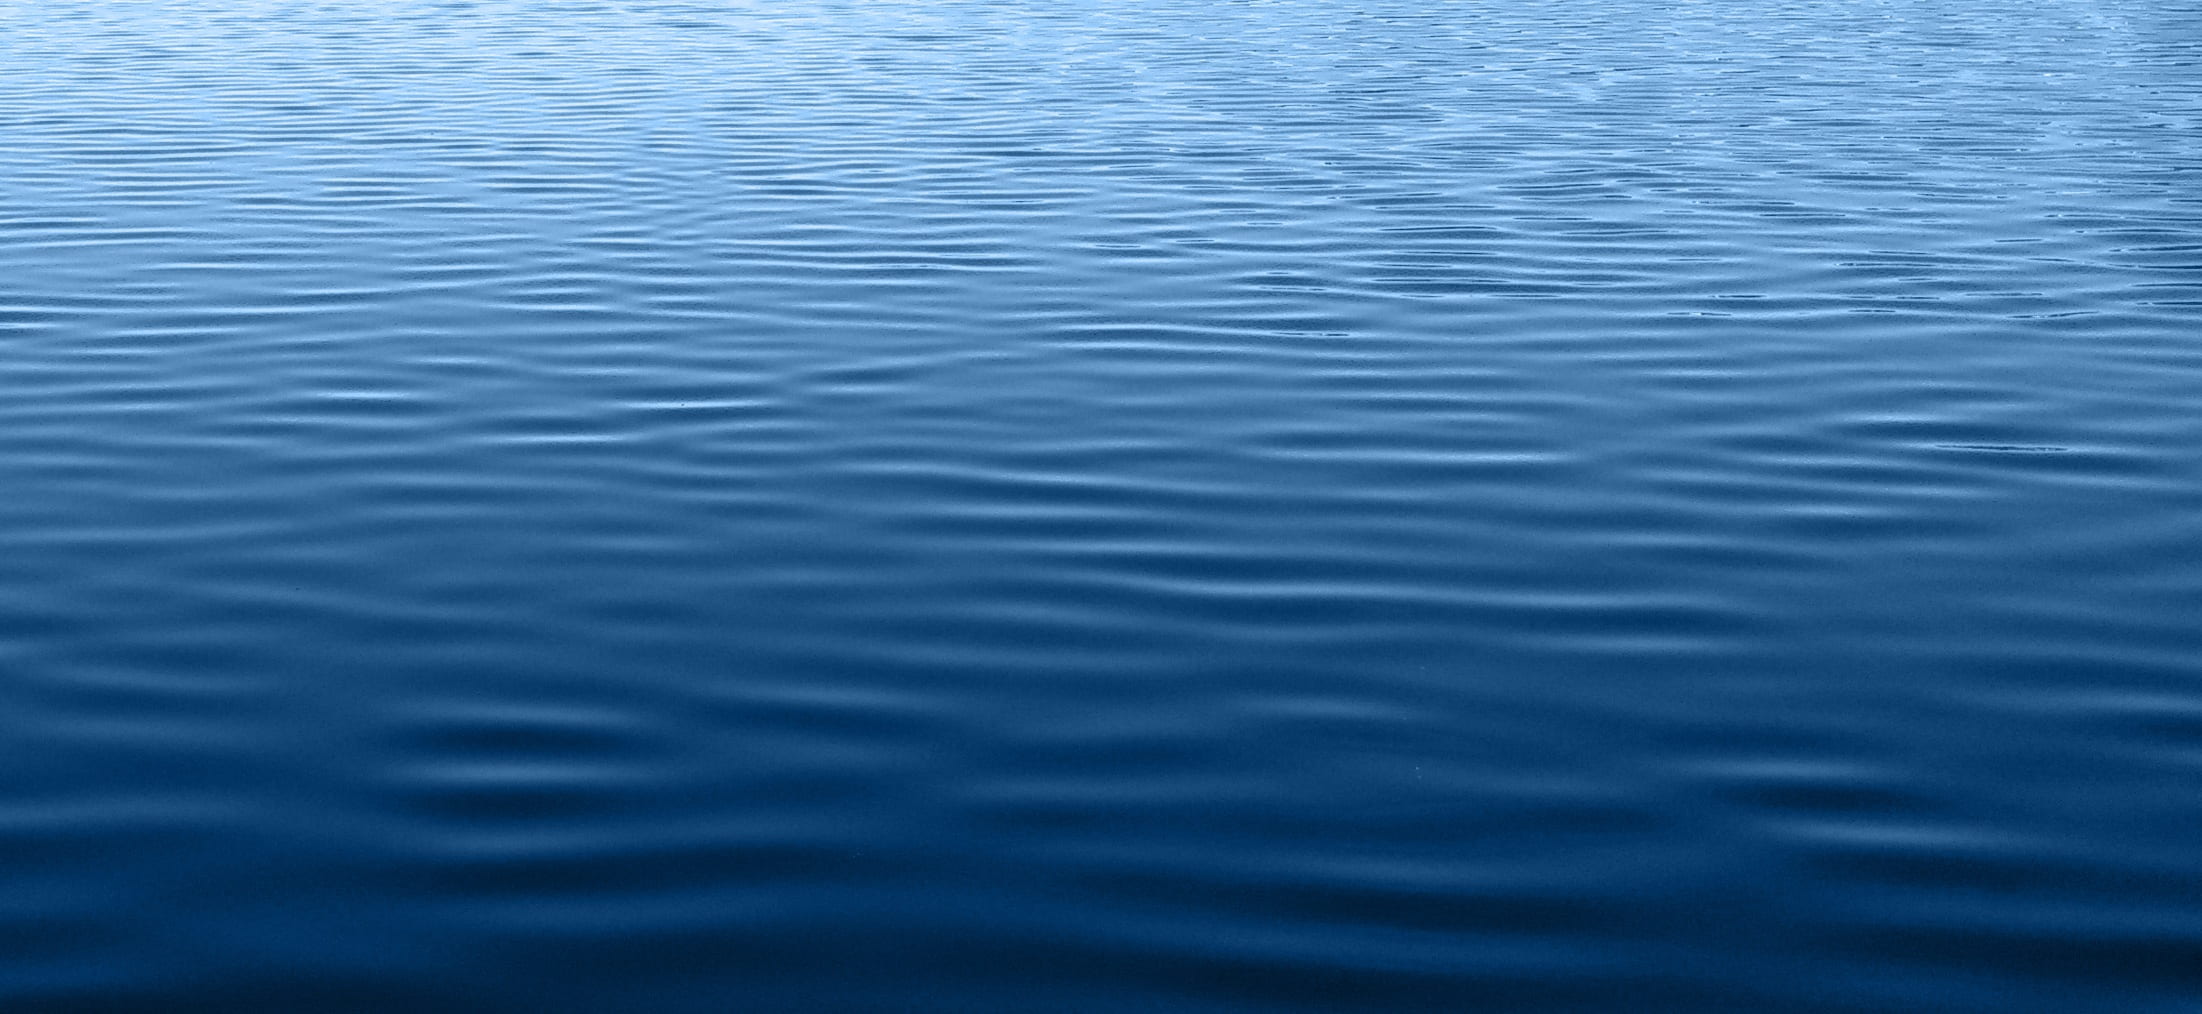 sea, water, blue, ocean, background, clean, lake, ripple, river